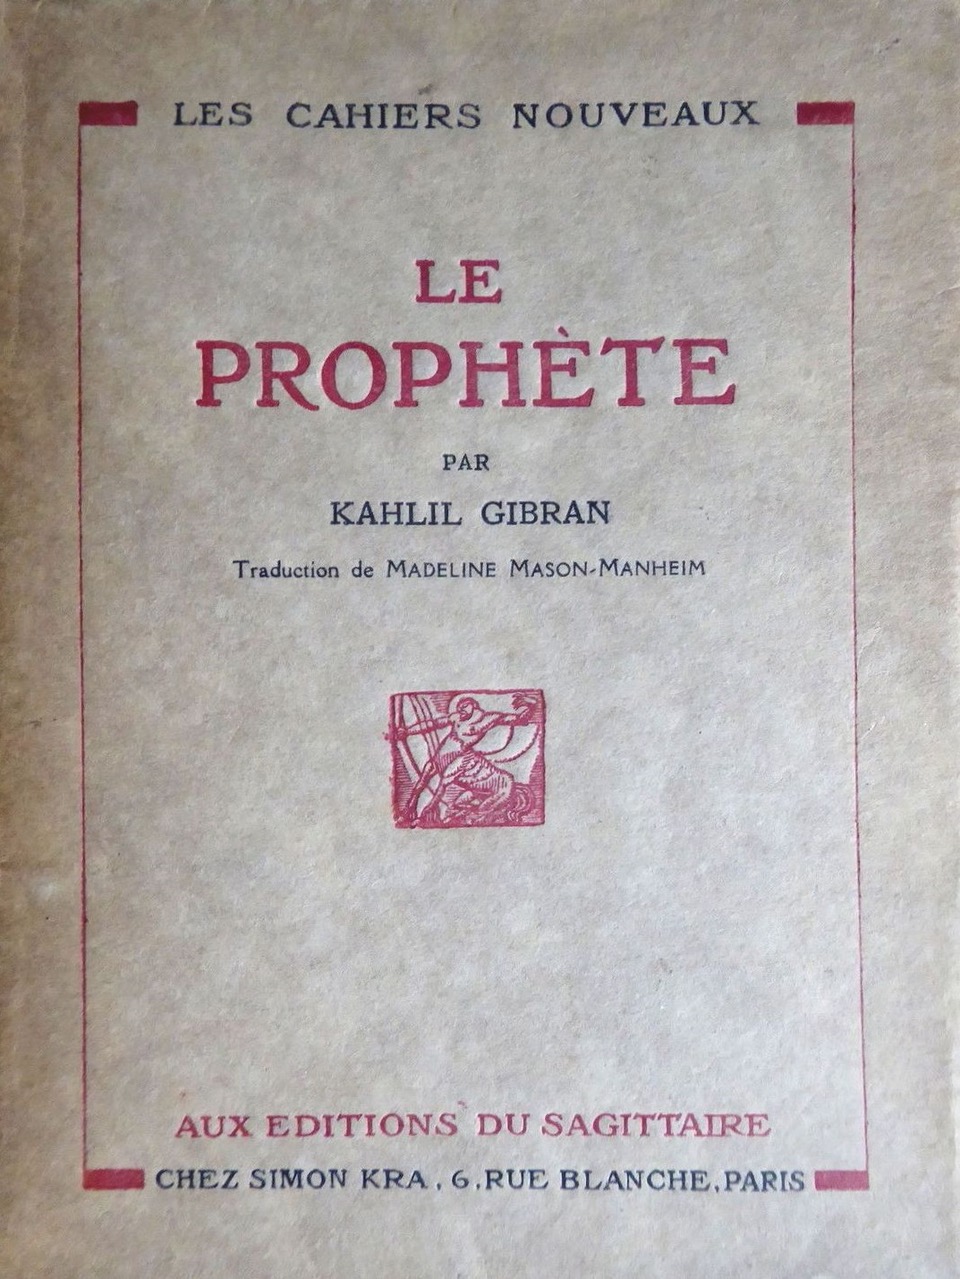 K. Gibran, Le prophète, translated into French by Madeline Mason-Manheim, Paris: Éditions du Sagittaire, 1926.